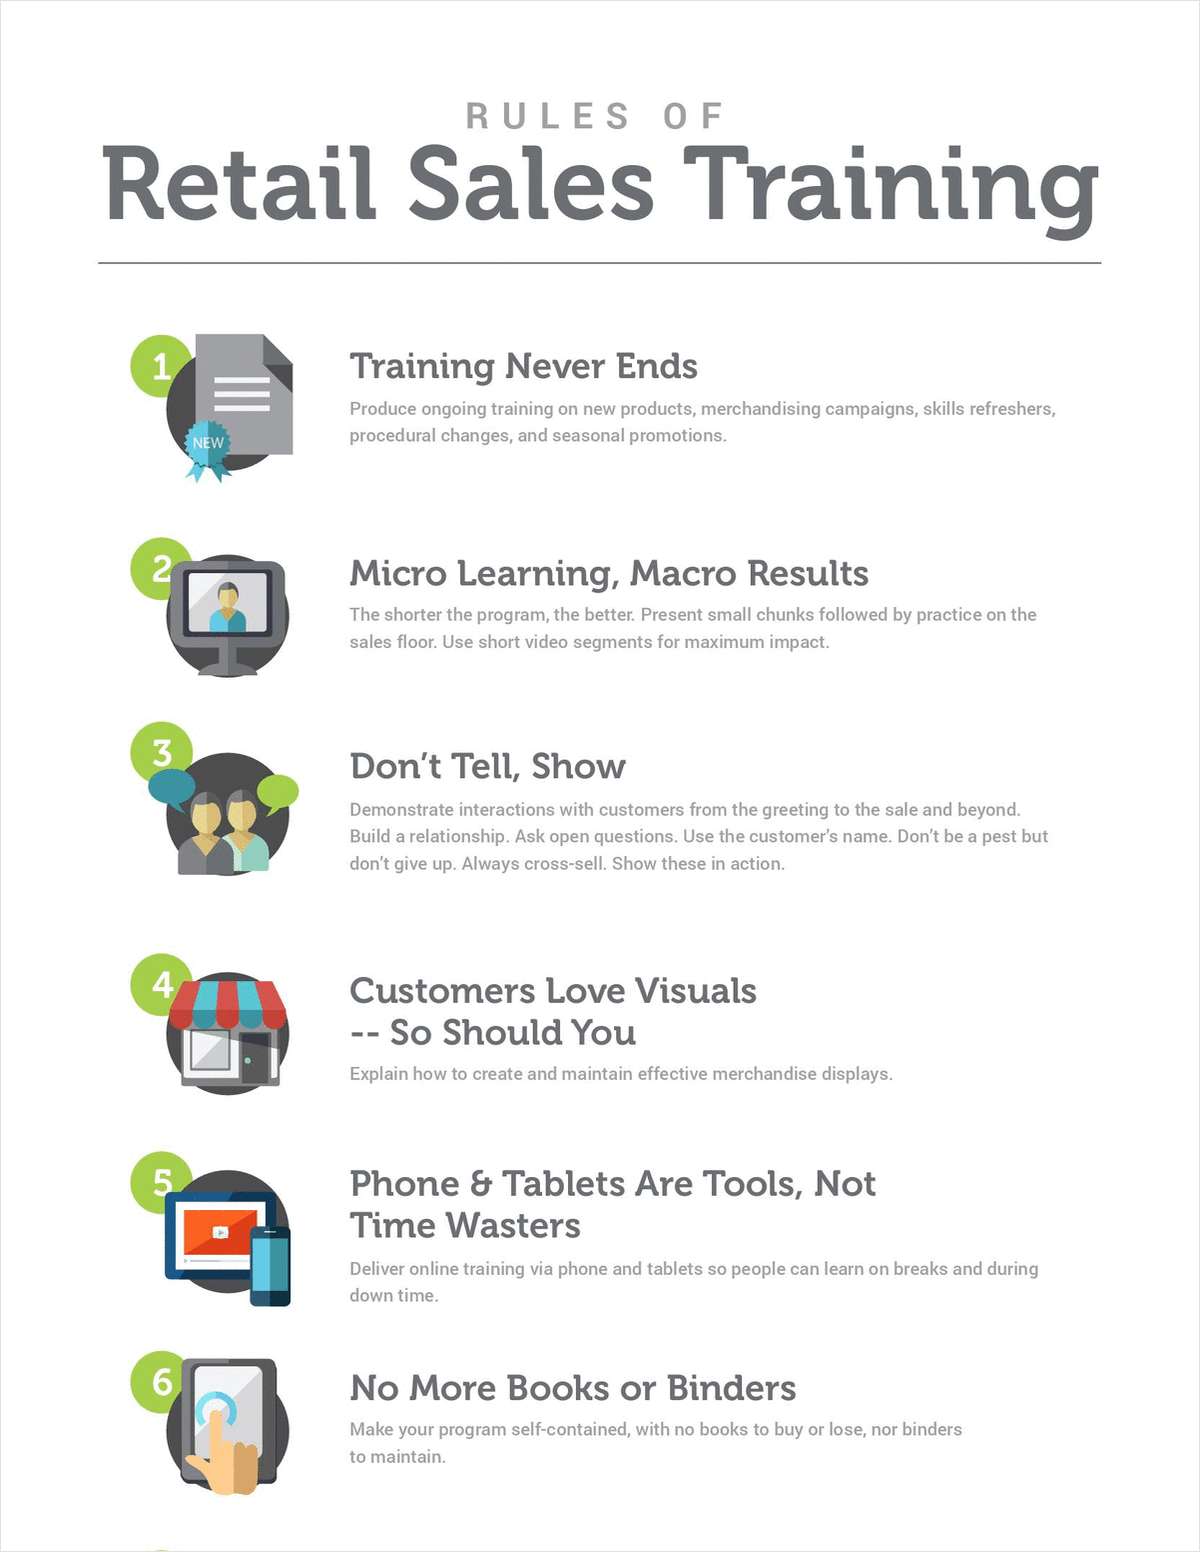 salesx training